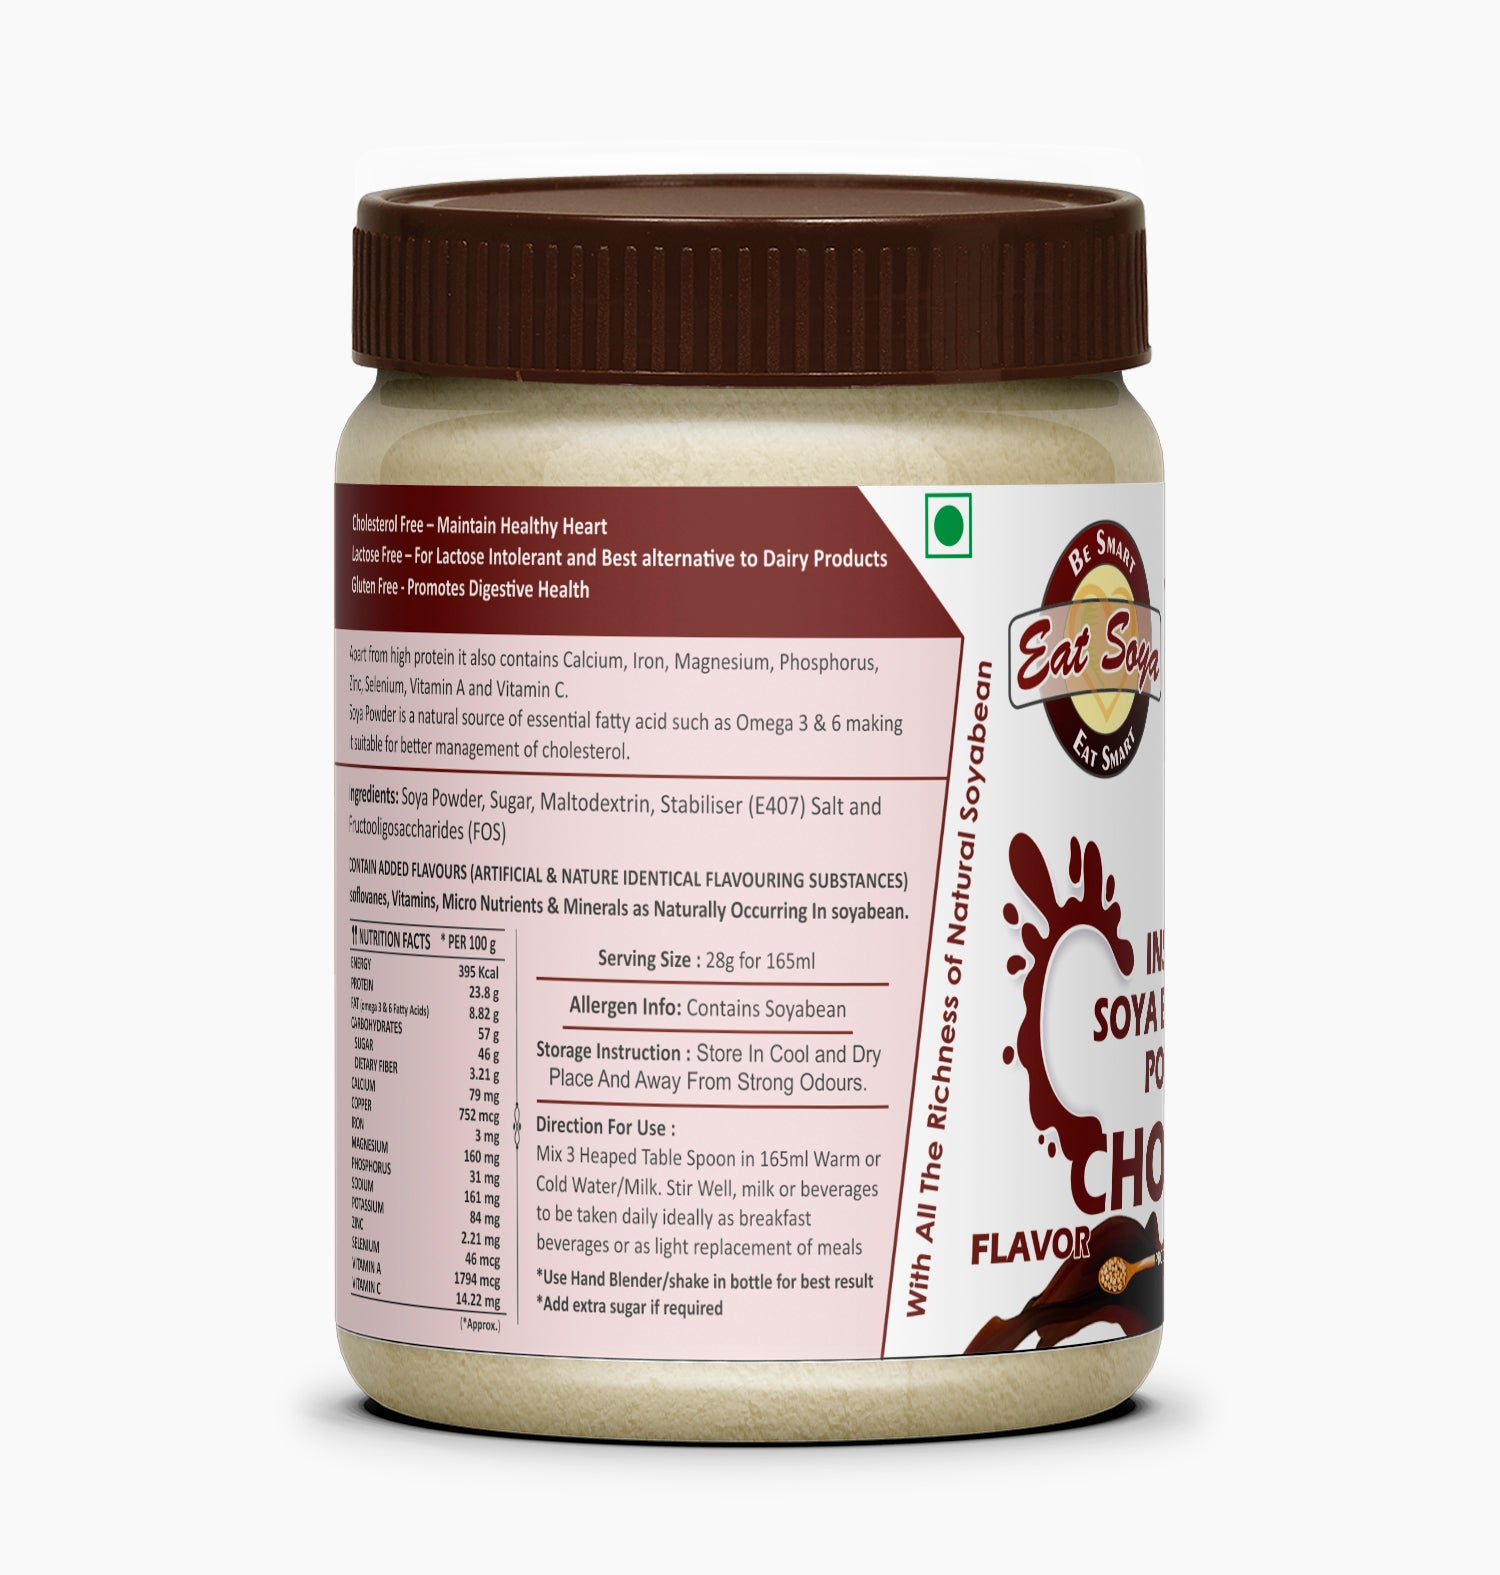 Soya Drink Powder - Chocolate - Vegan, Non GMO 200 g